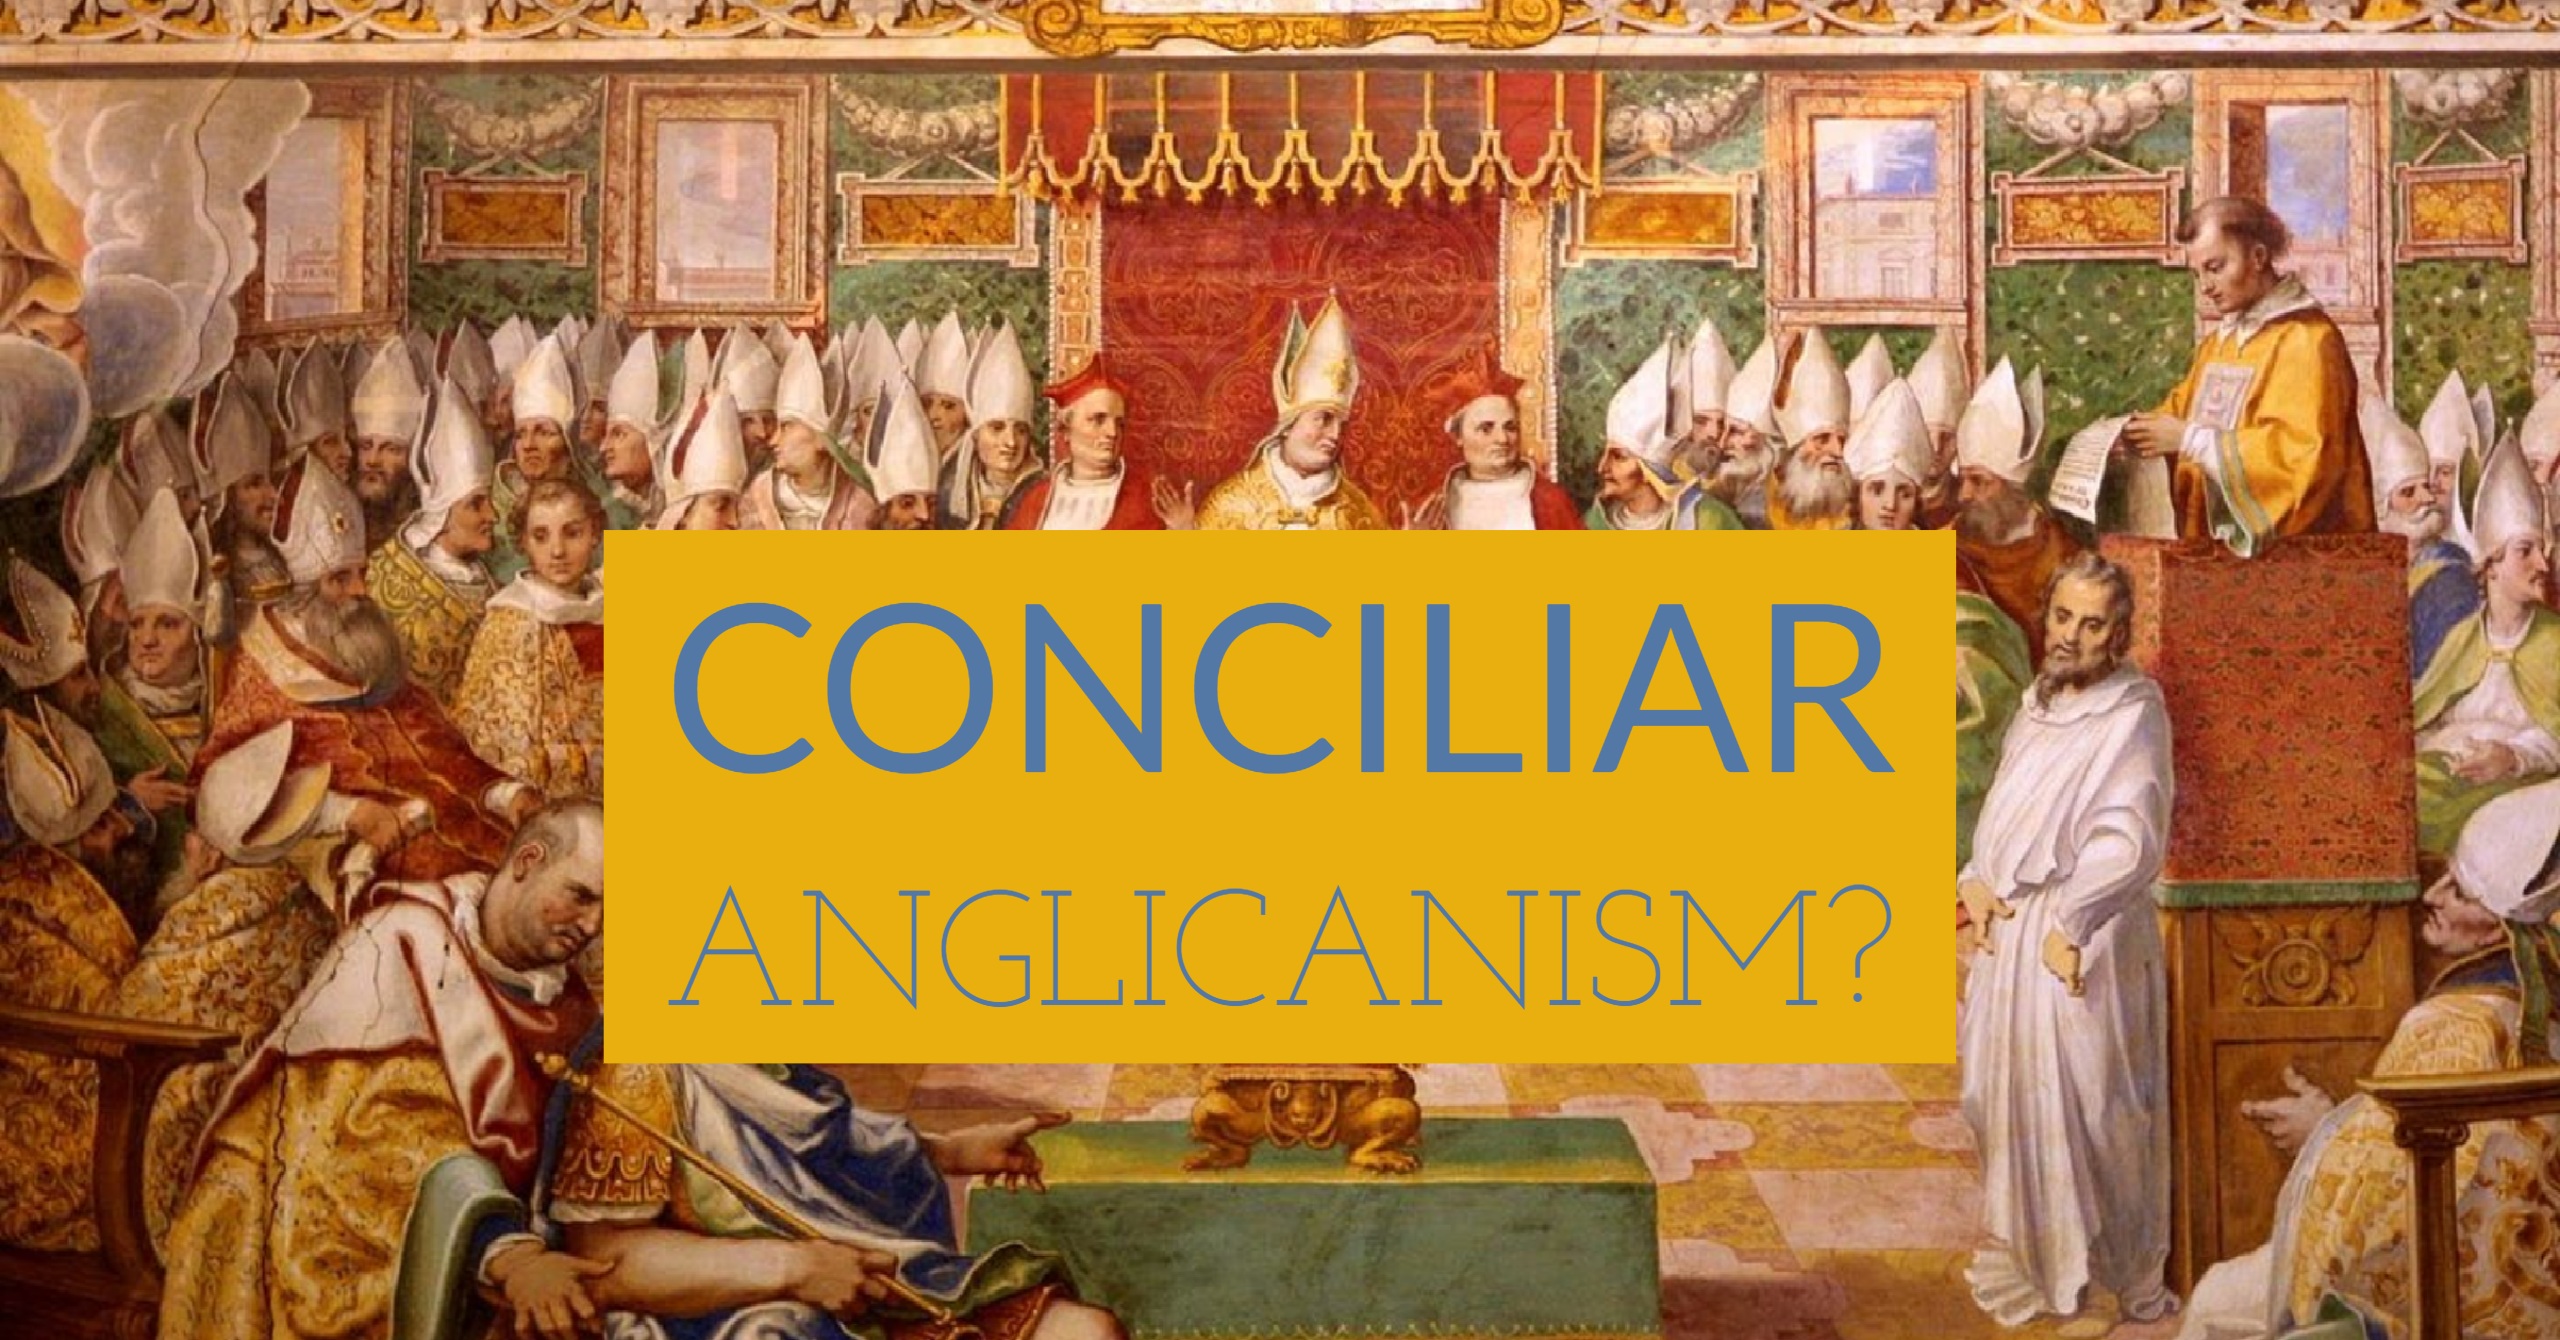 Conciliar Anglicanism?